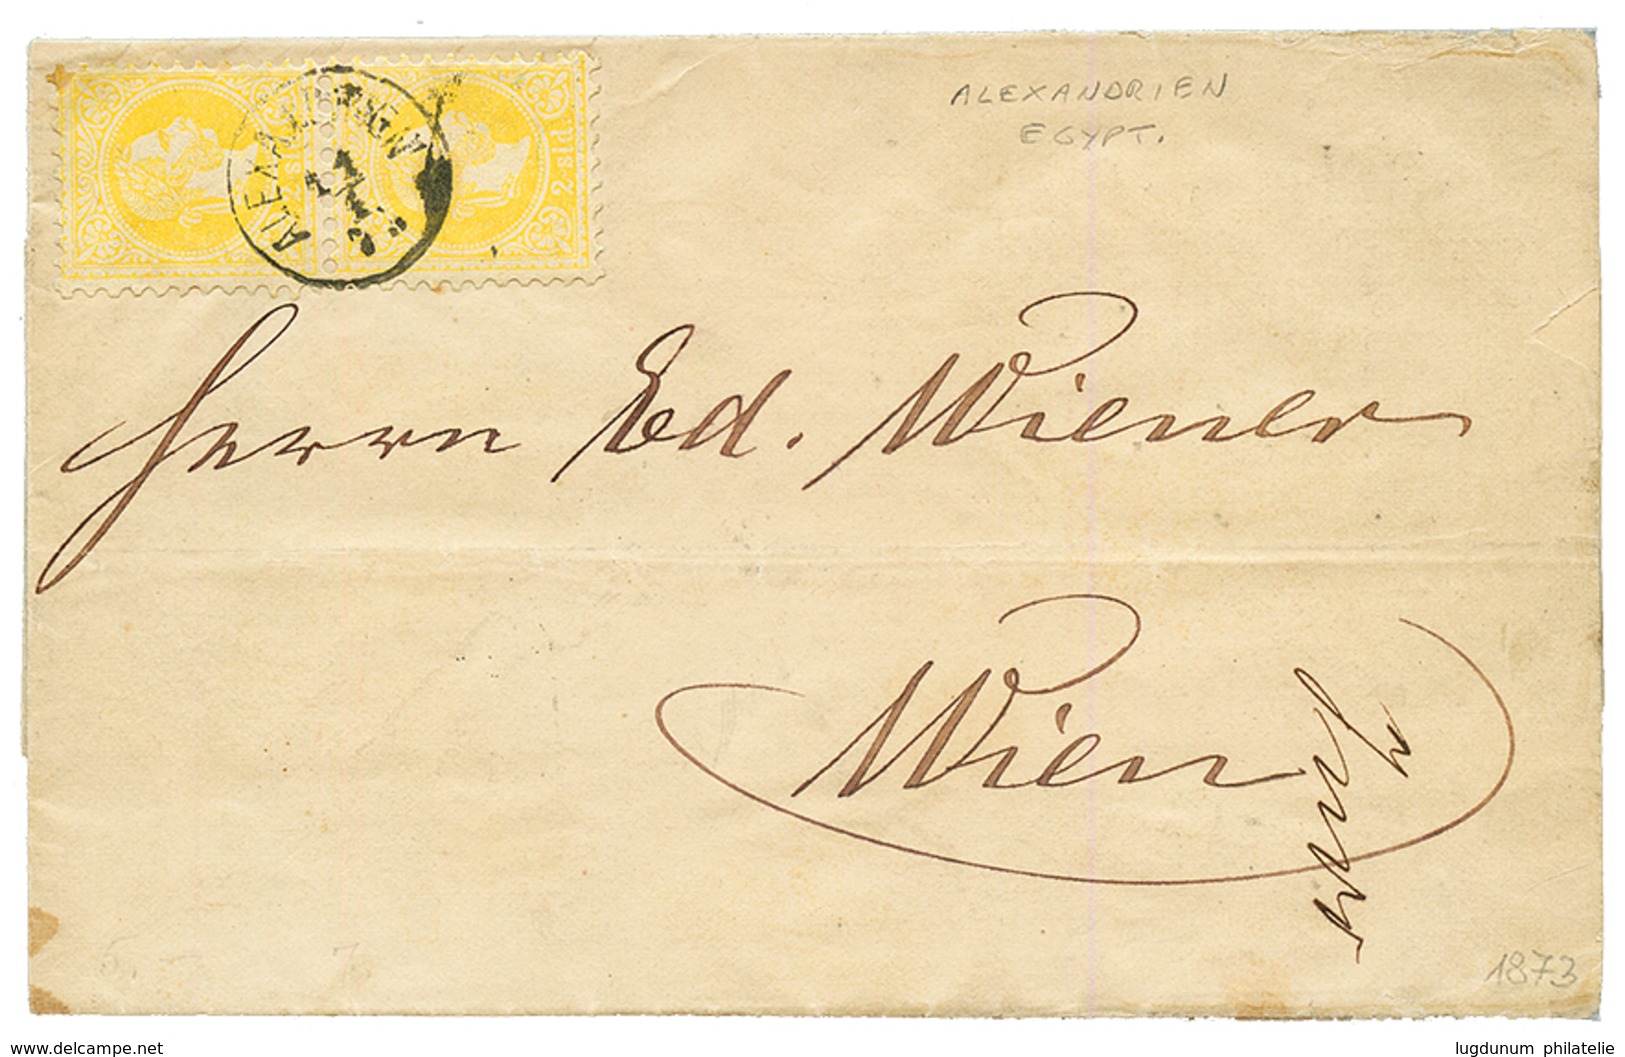 ALEXANDRIA : 1873 Pair 2 SOLDI Canc. ALEXANDRIEN On Complete PRINTED MATTER To WIEN. Scarce. Vf. - Eastern Austria